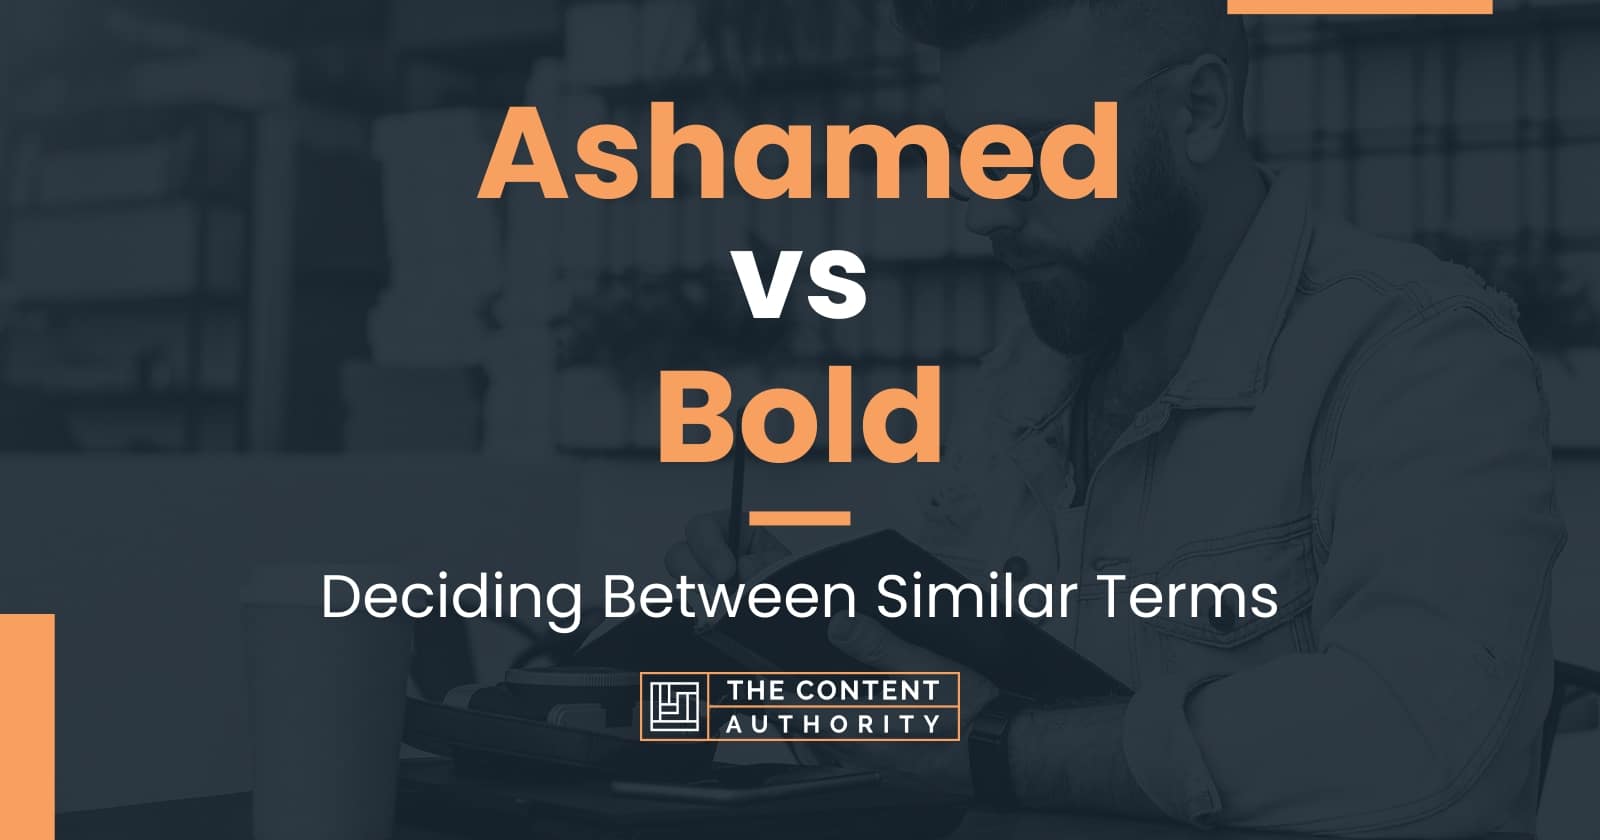 Ashamed vs Bold: Deciding Between Similar Terms